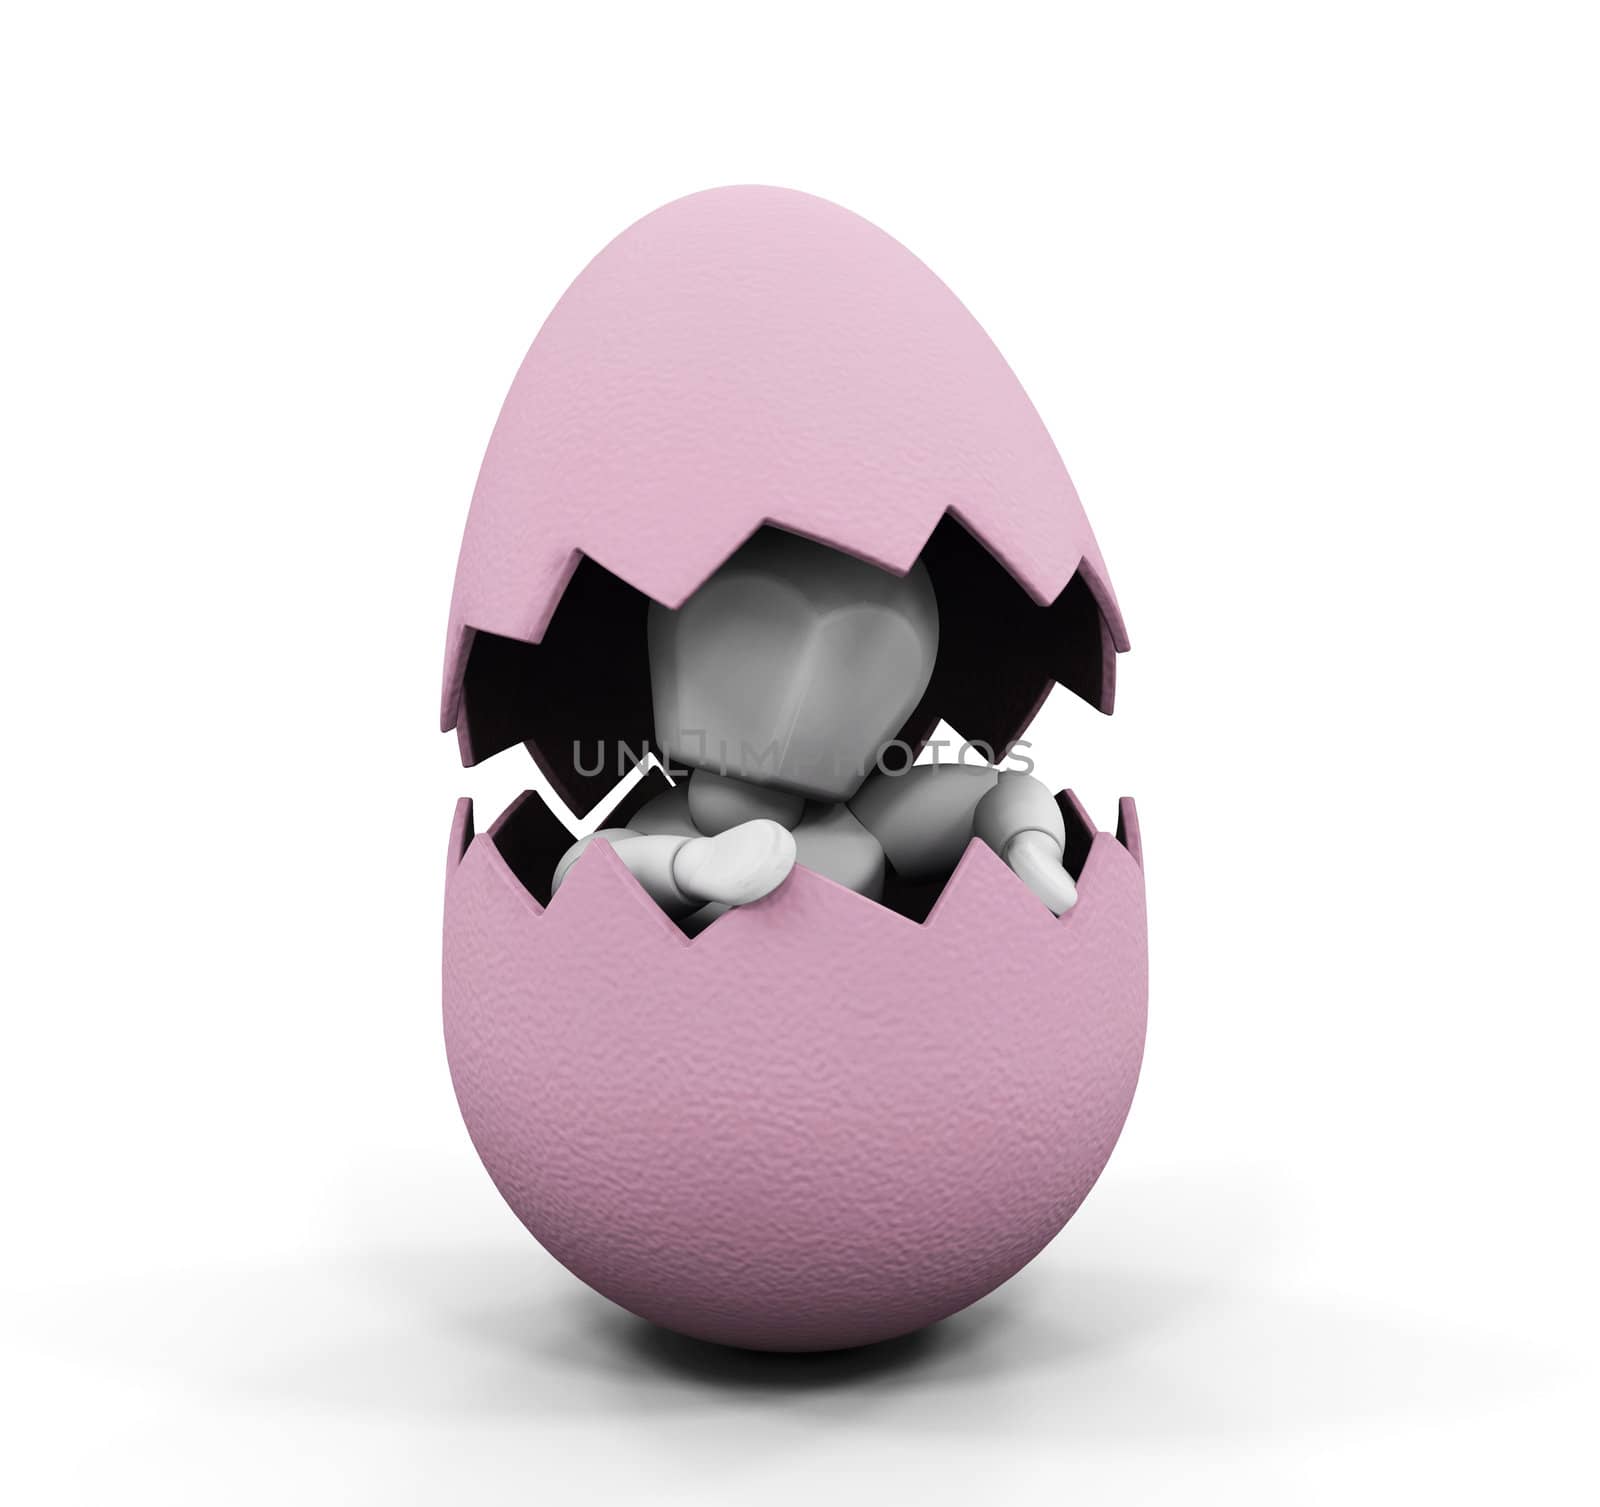 Person inside Easter egg by kjpargeter